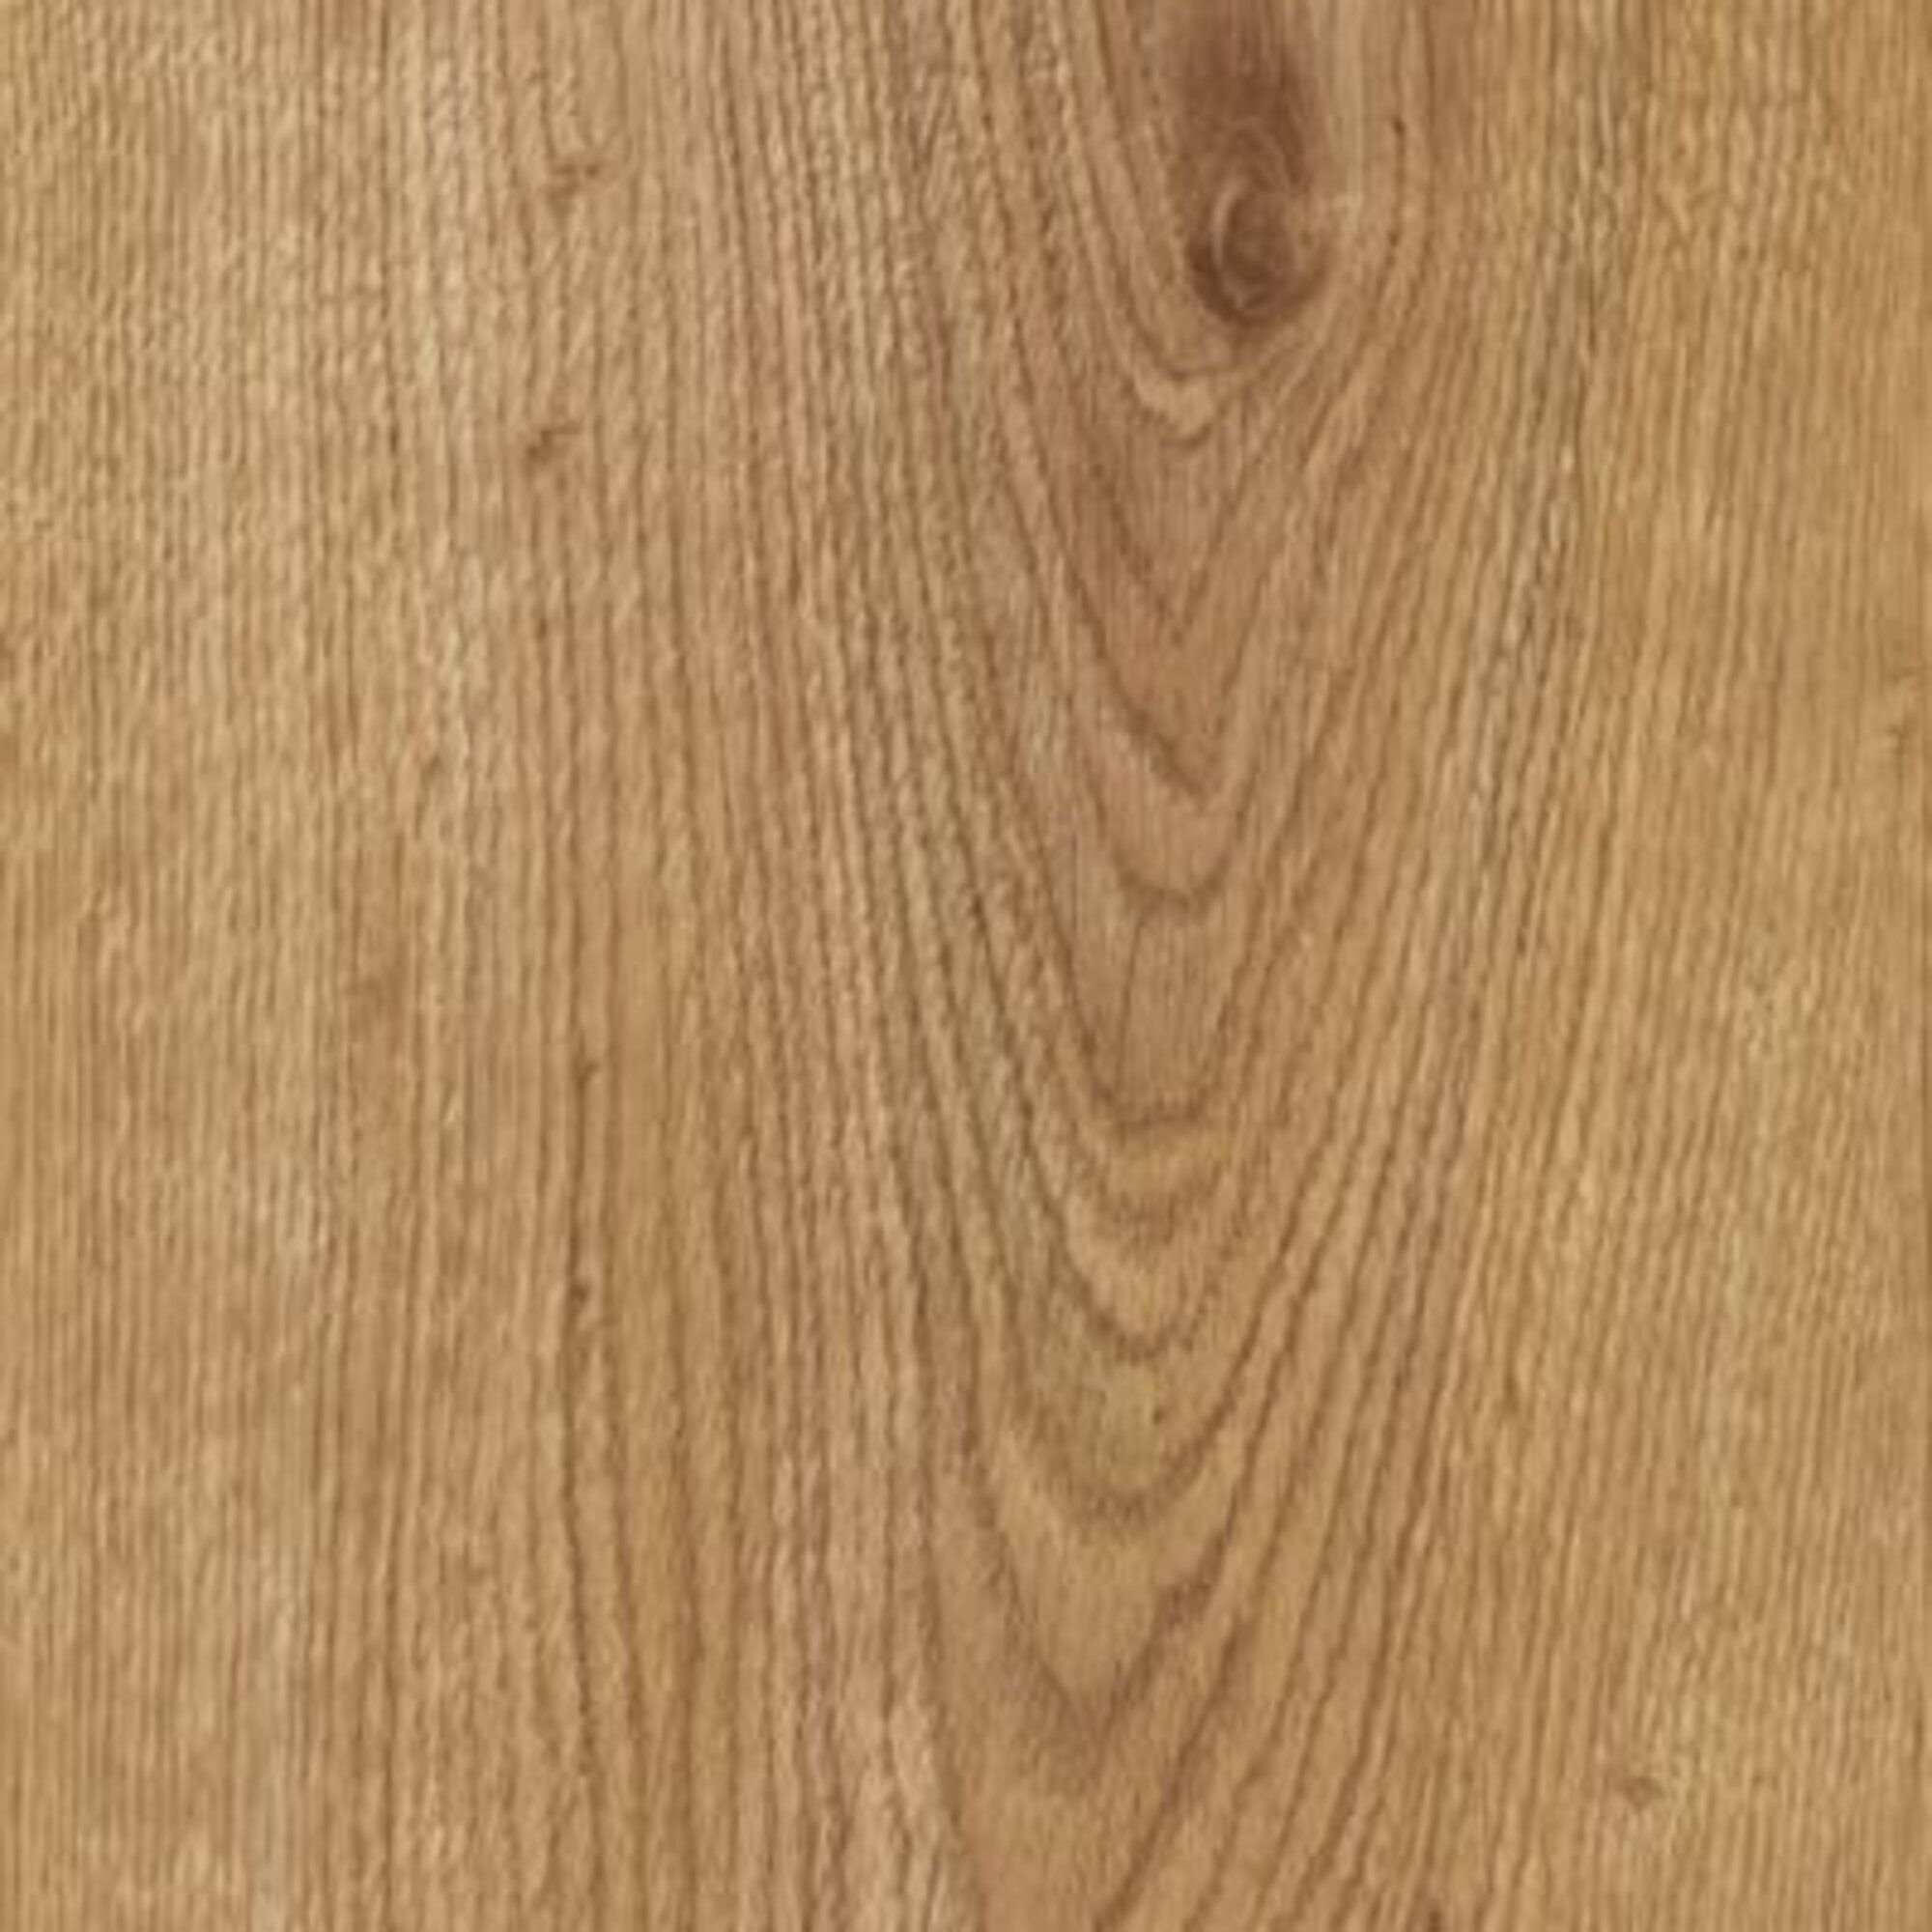 Euro Home Ravensdale Wood Natural oak effect Laminate flooring Sample